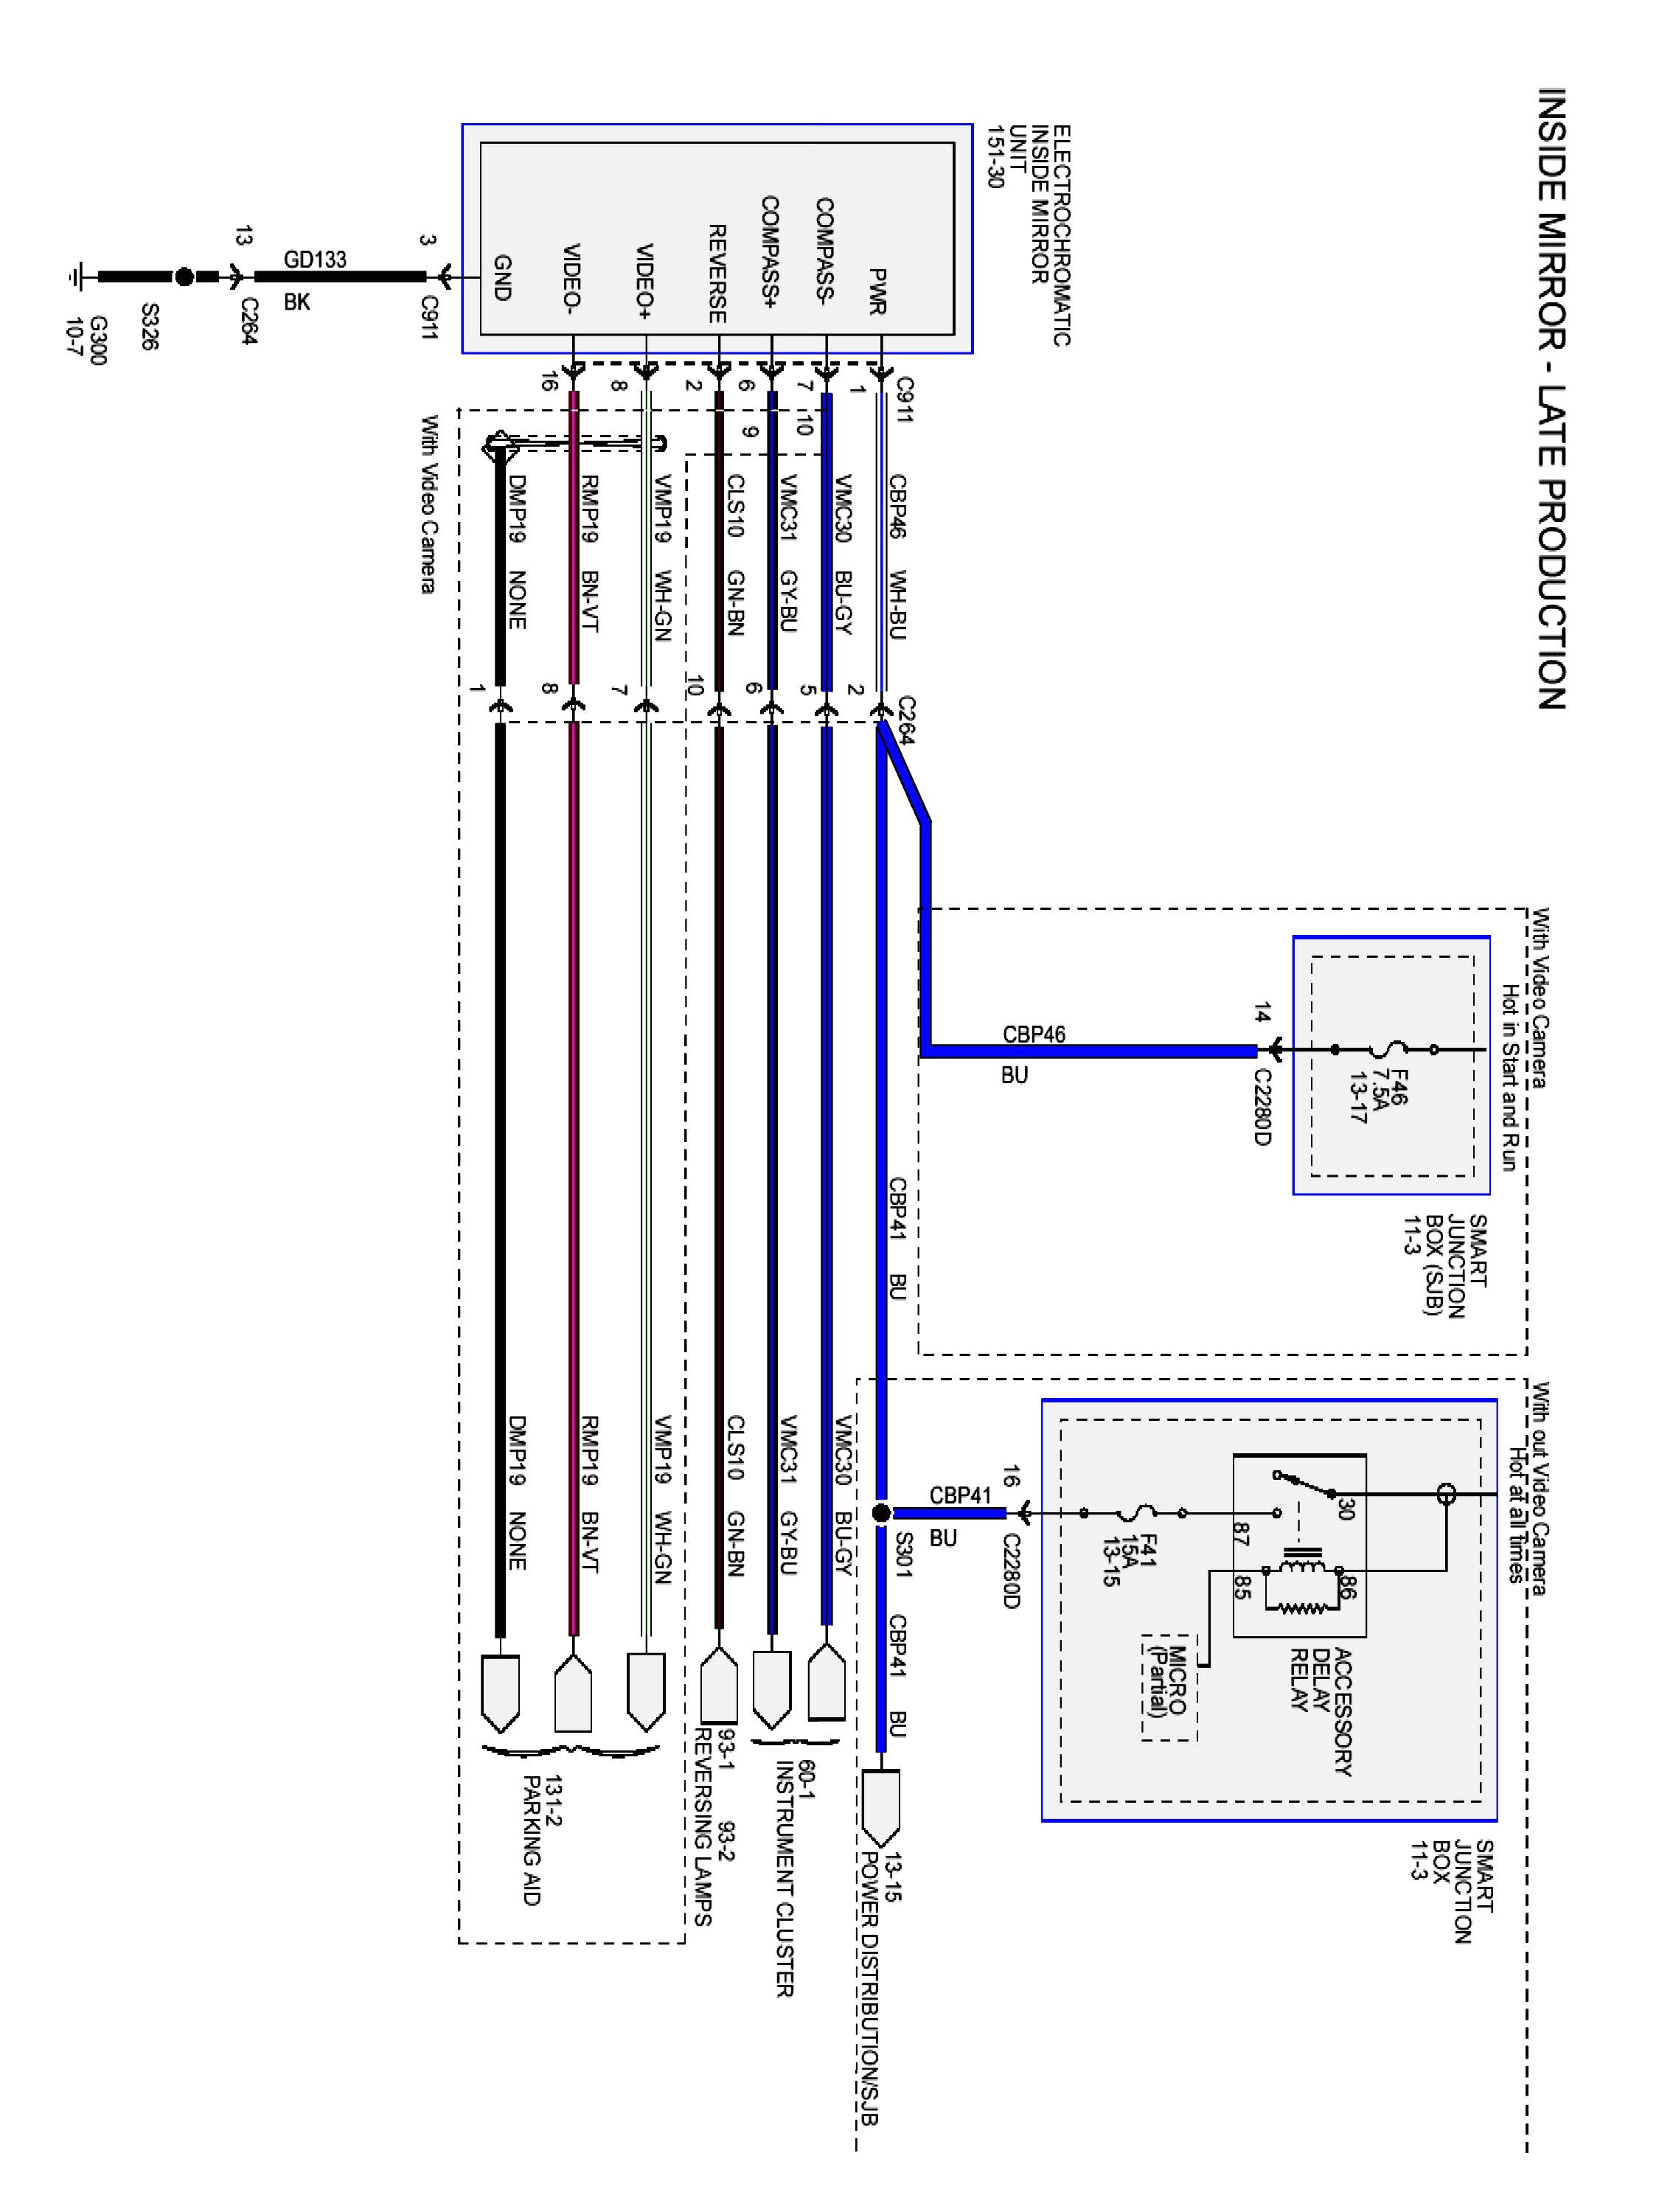 alpine backup camera wiring diagram samsung security camera wiring diagram new diagrams 2010 gmc wiring